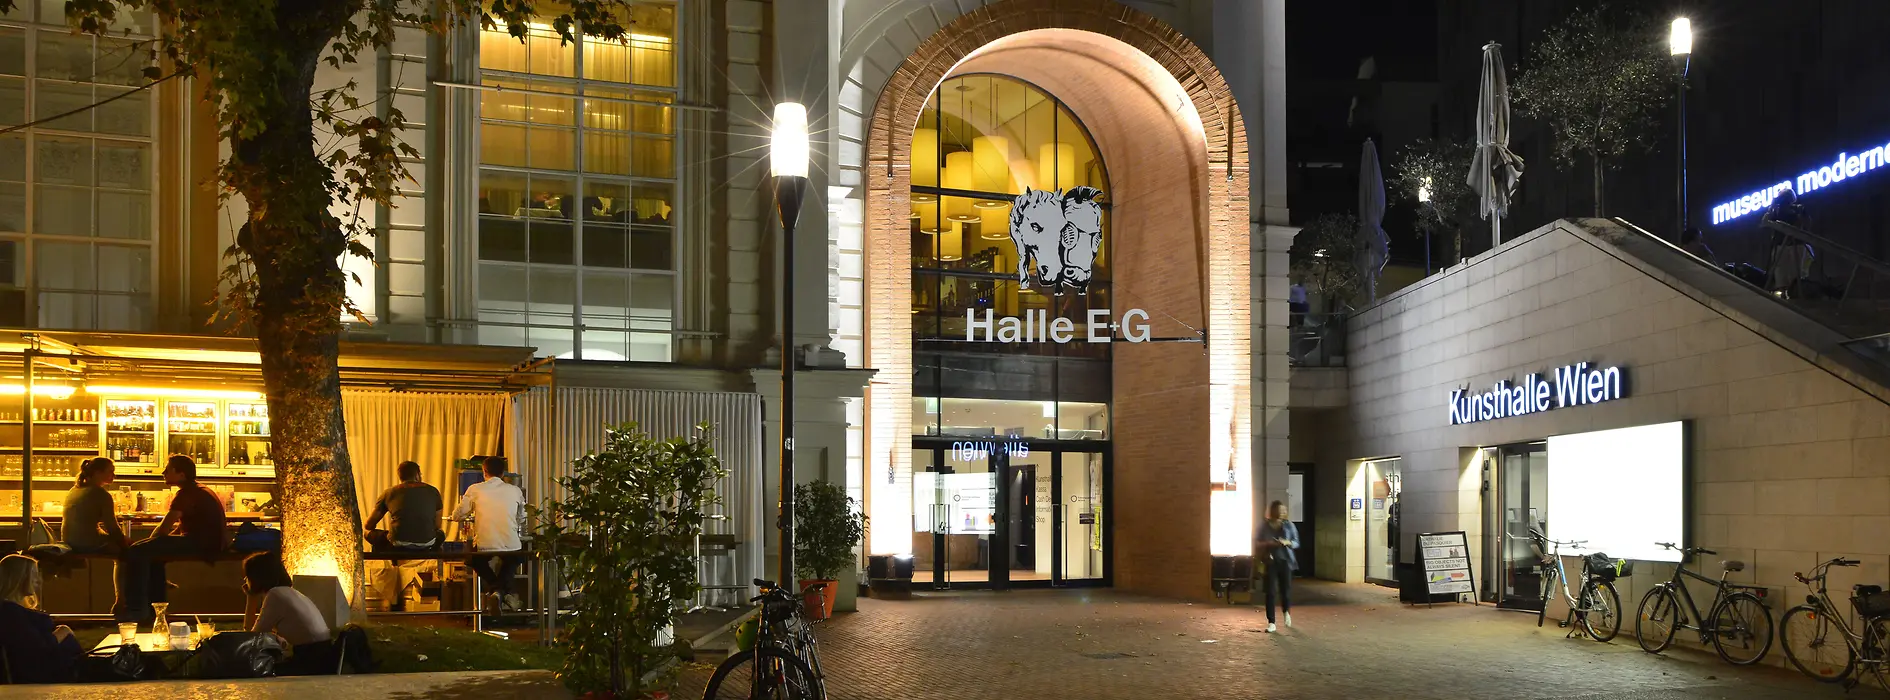 Halle E G exterior view